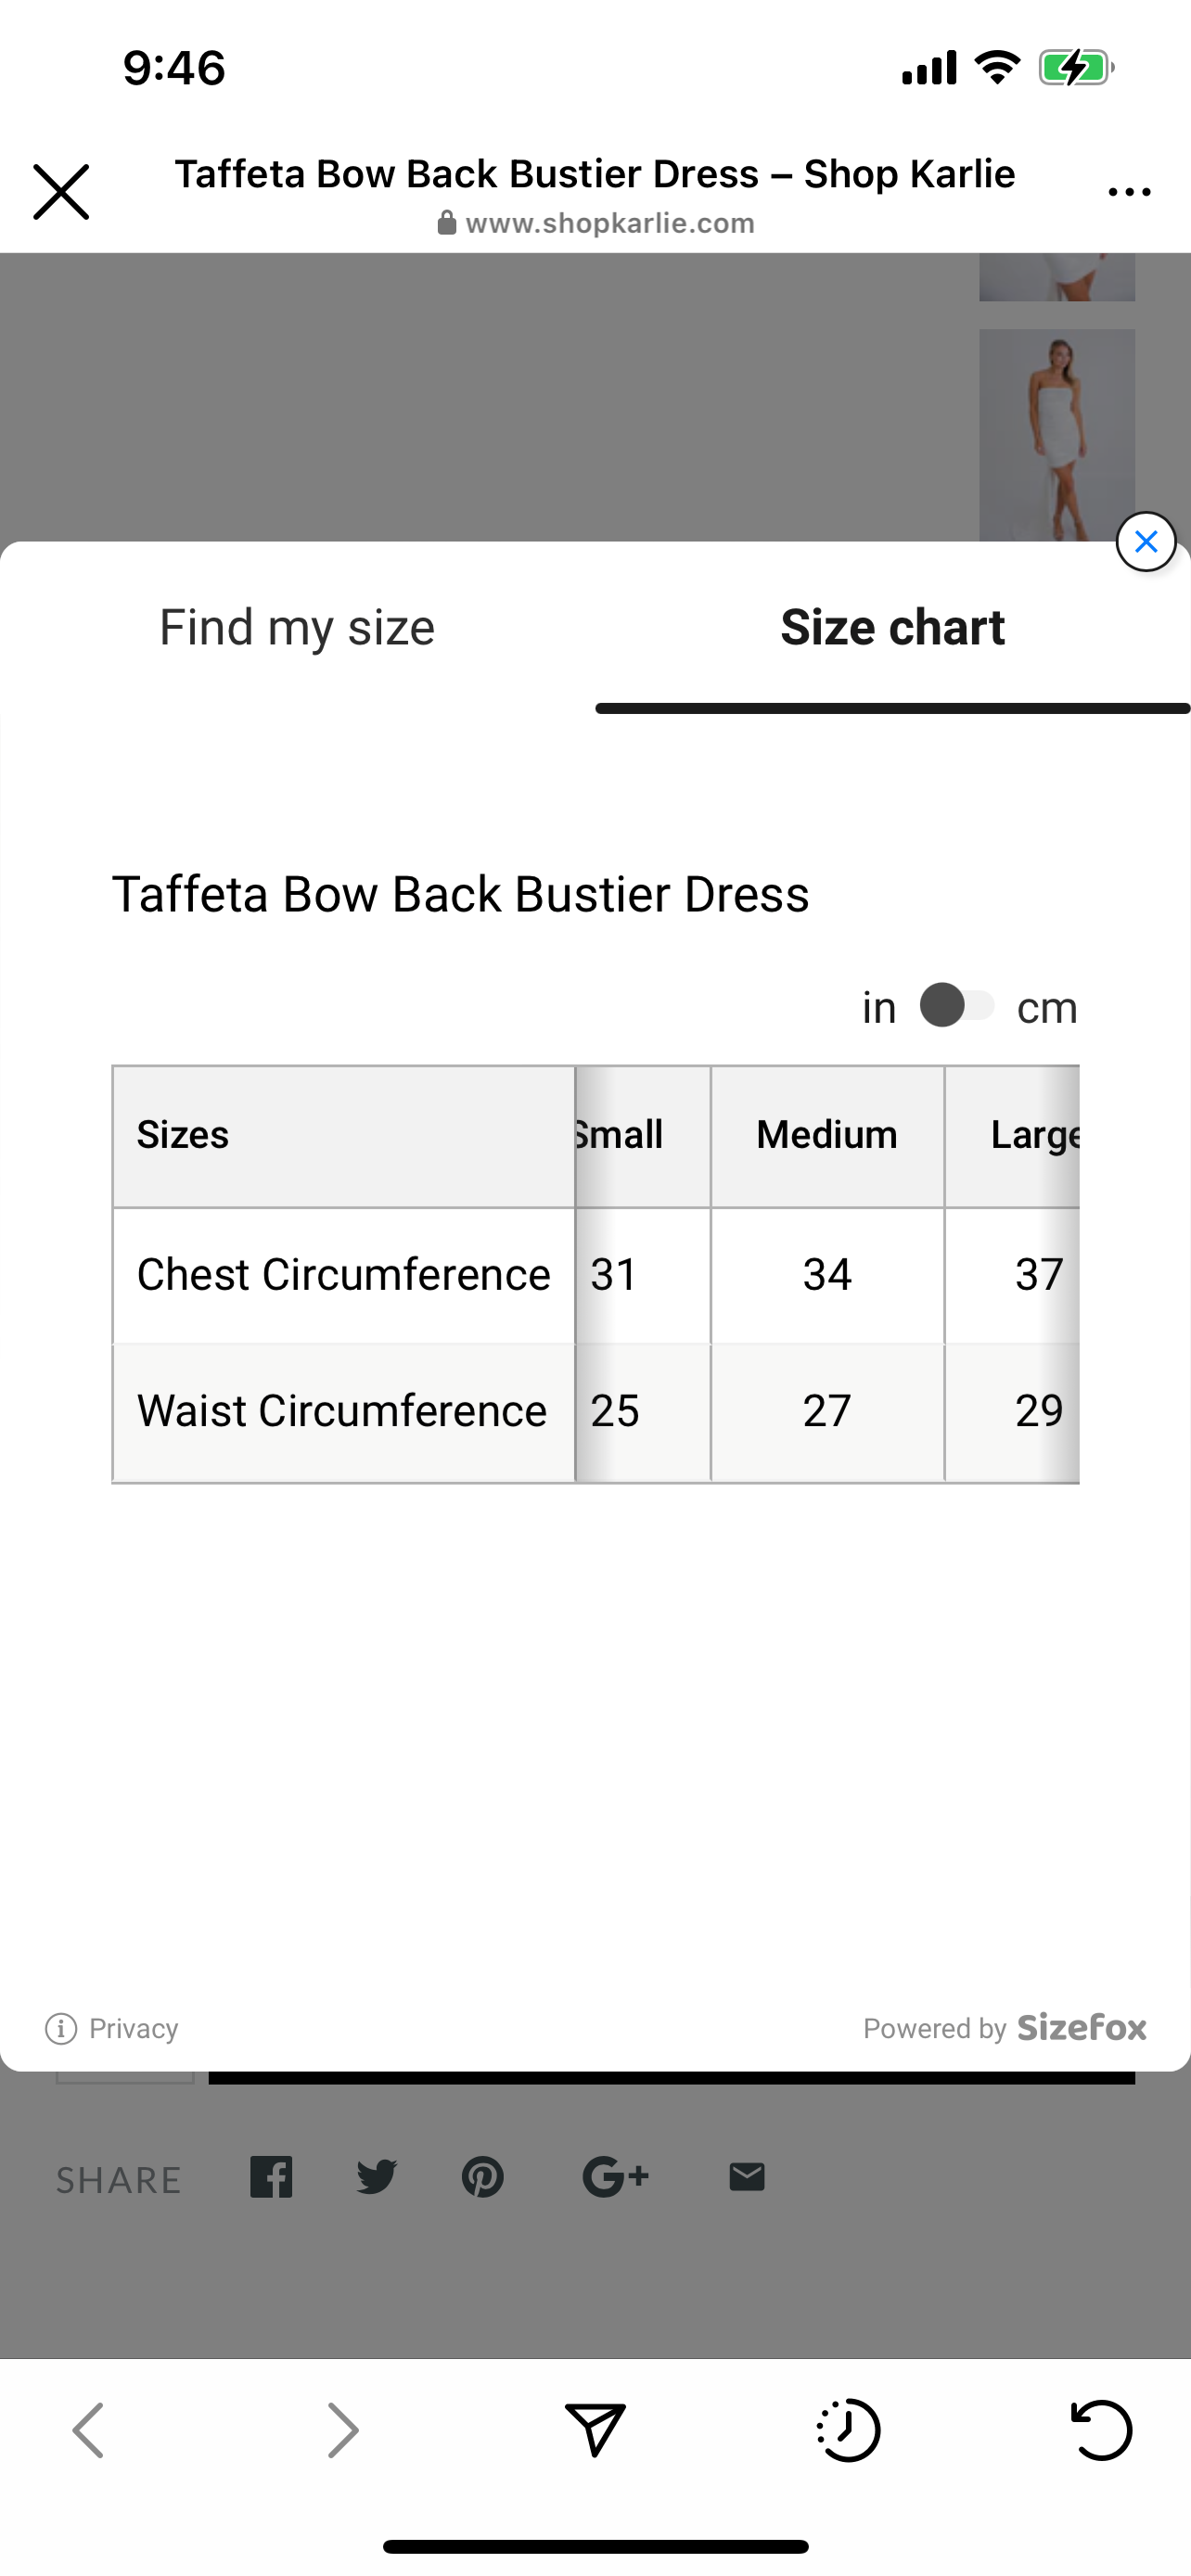 Taffeta Bow Back Bustier Dress